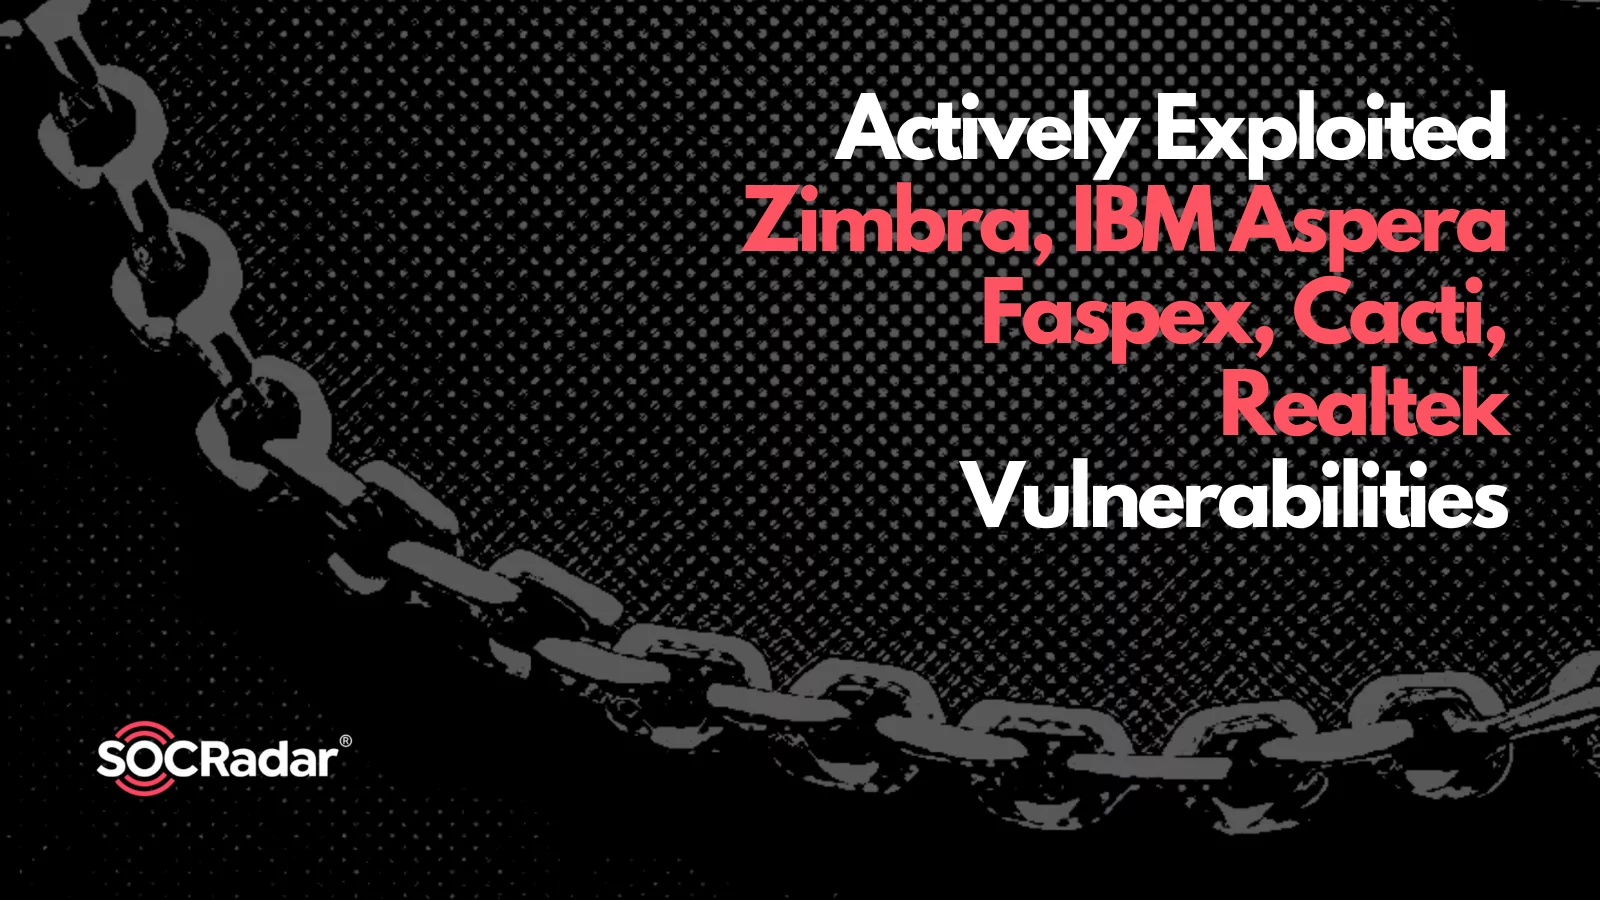 SOCRadar® Cyber Intelligence Inc. | Attackers Actively Exploit Vulnerabilities in Unpatched Products: Zimbra, IBM Aspera Faspex, Cacti, Realtek